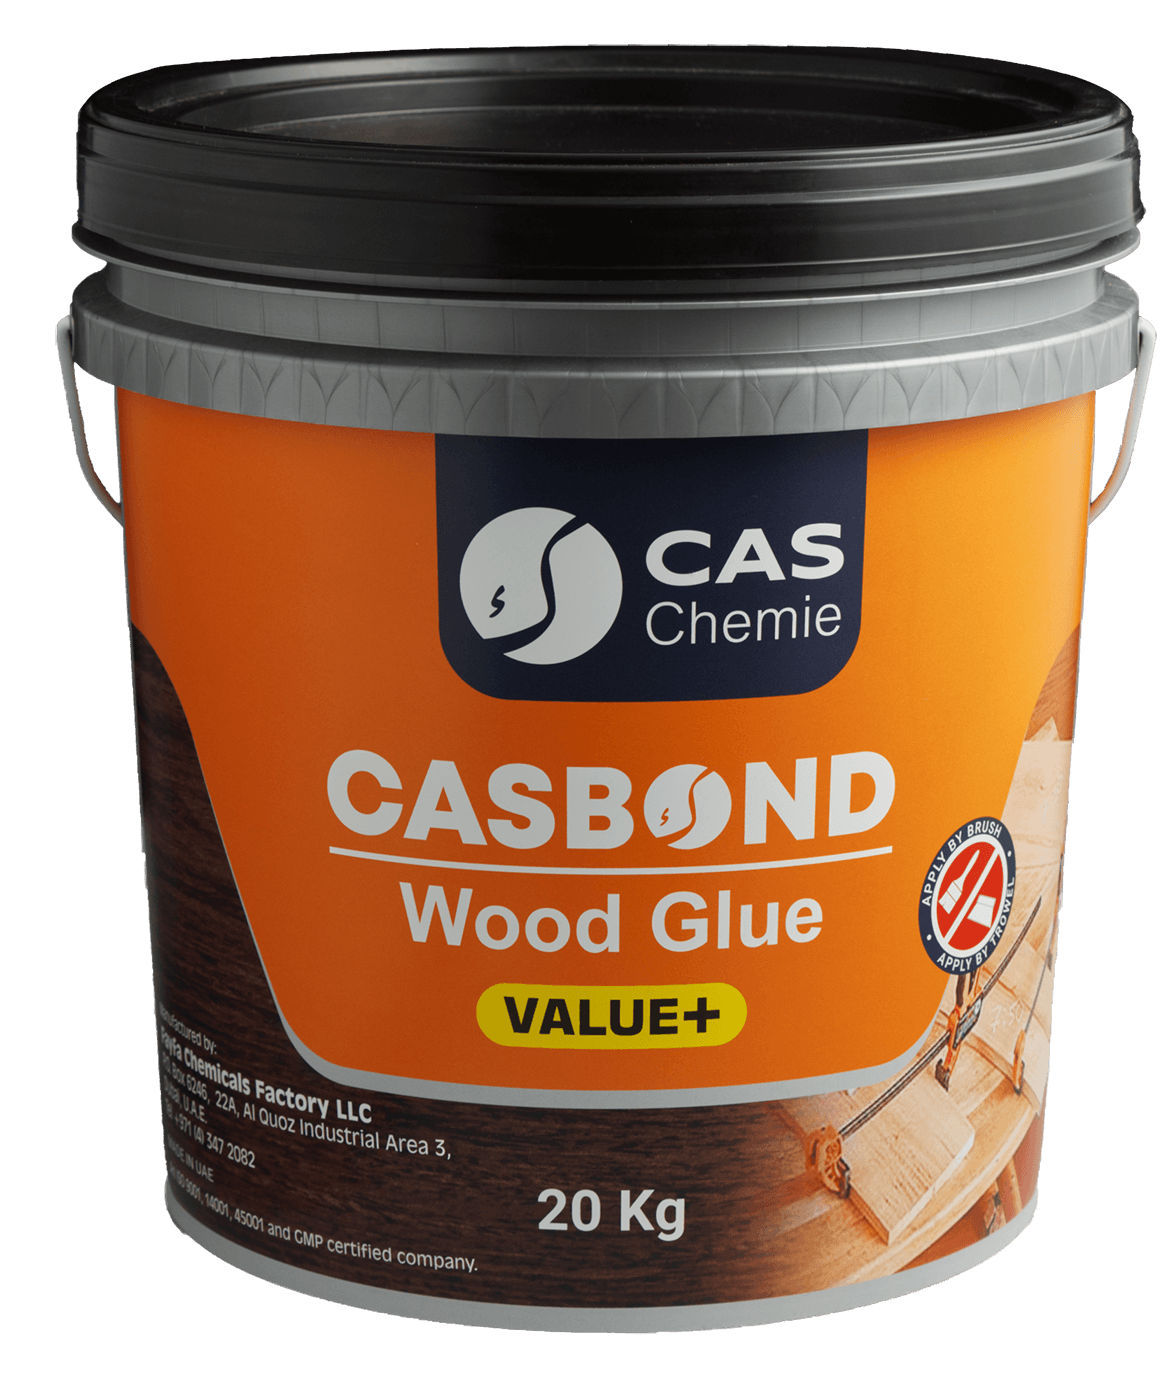 CasBond Value Plus Wood Glue